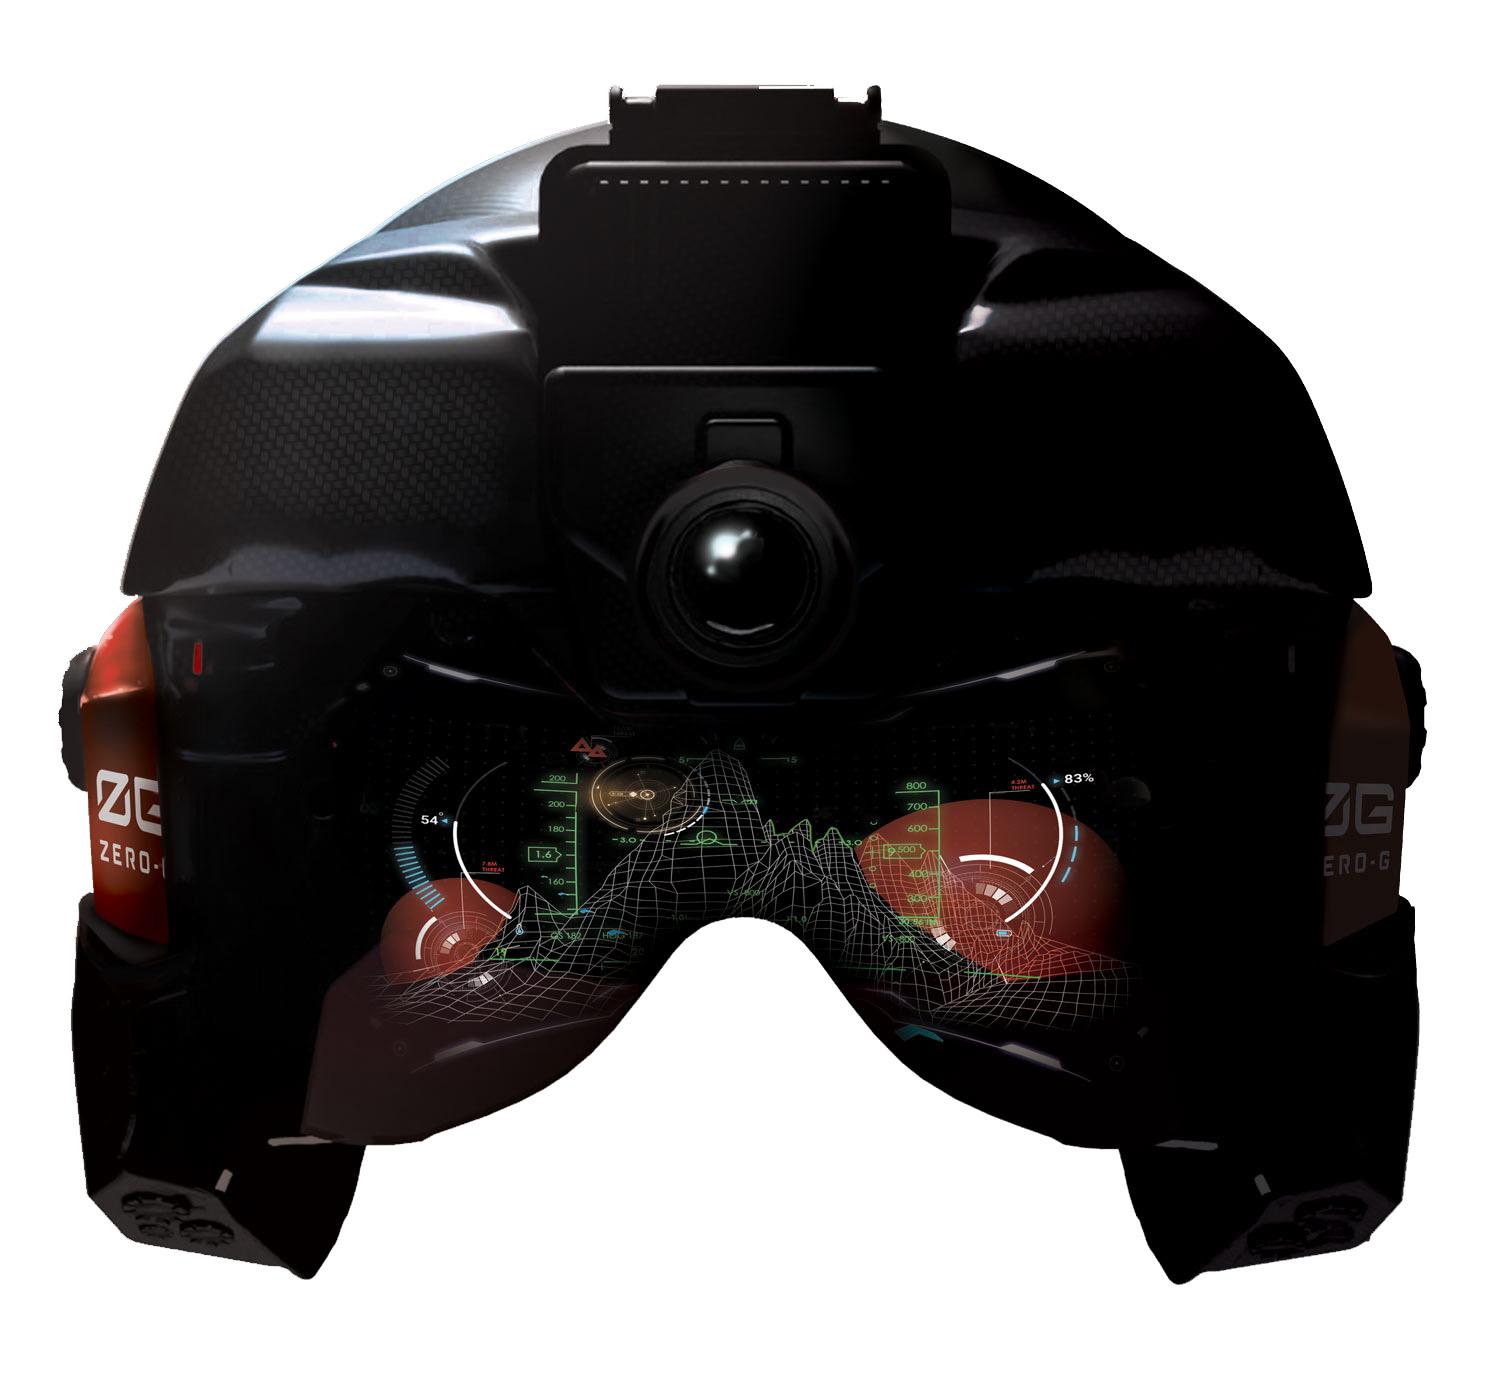 Zero-G helmet-mounted display system